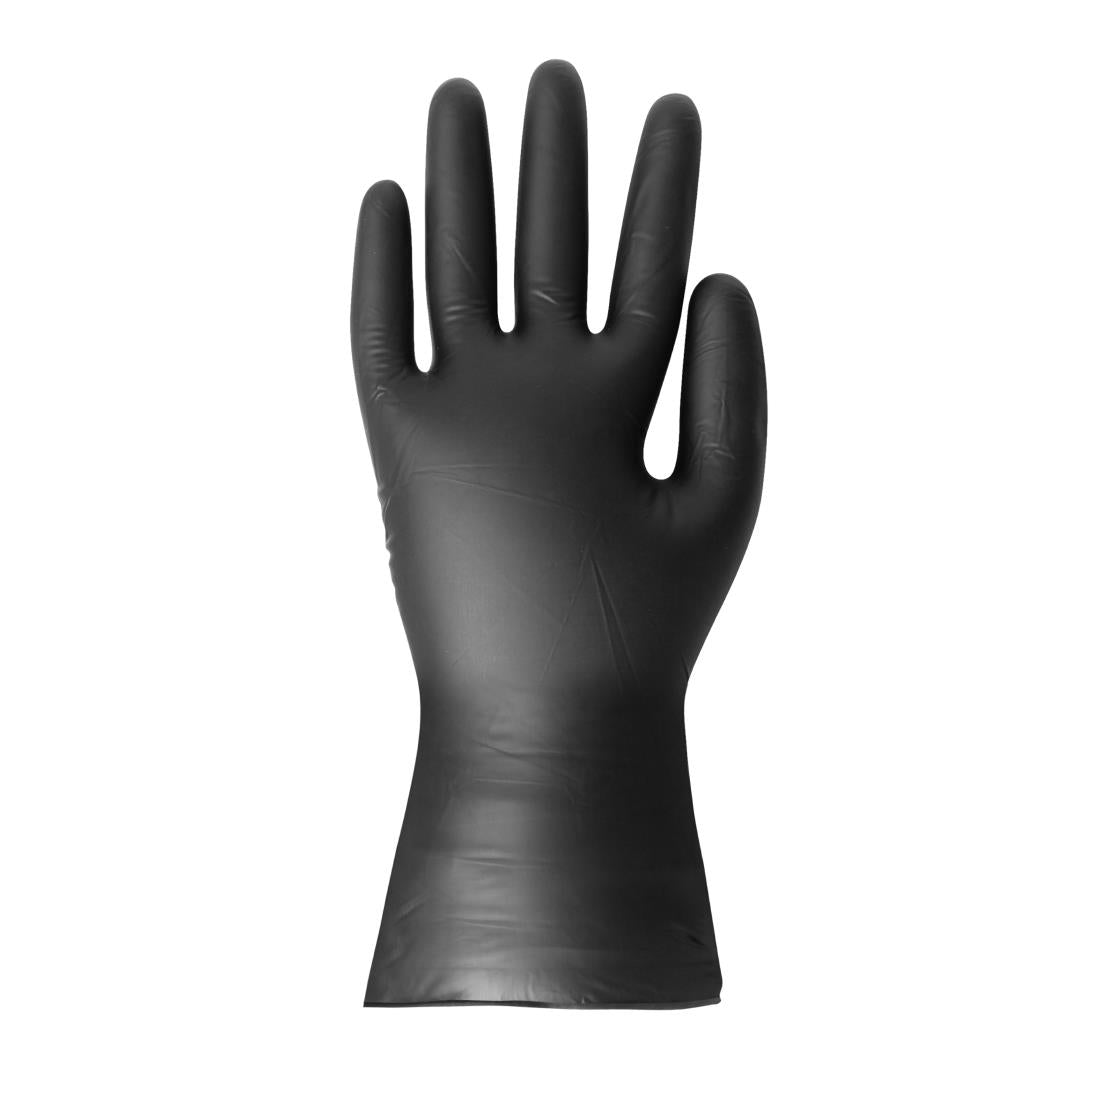 FJ748-M Hygiplas Vinyl Black Powder Free Glove M - pack 100 JD Catering Equipment Solutions Ltd